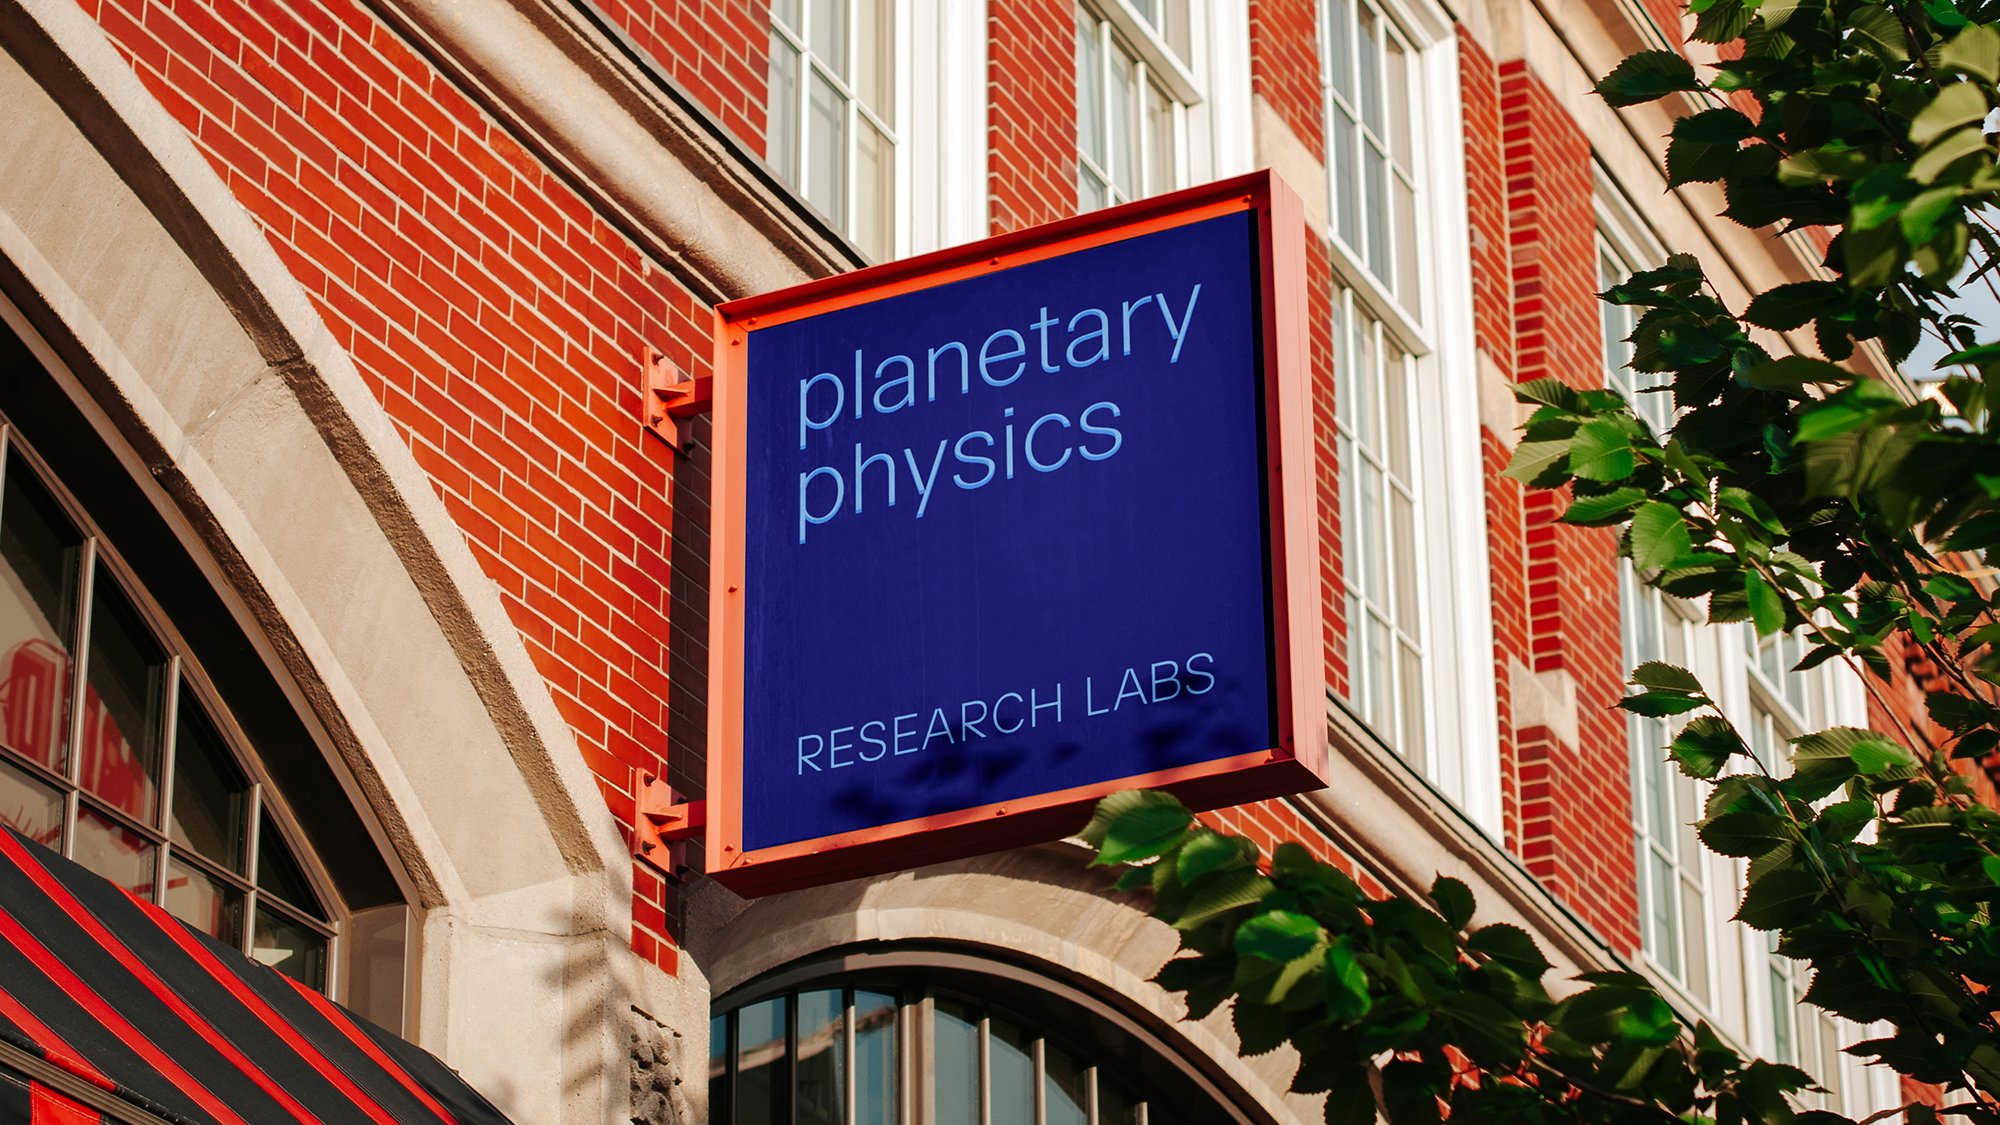 planetary physics sign 1-web72.jpg